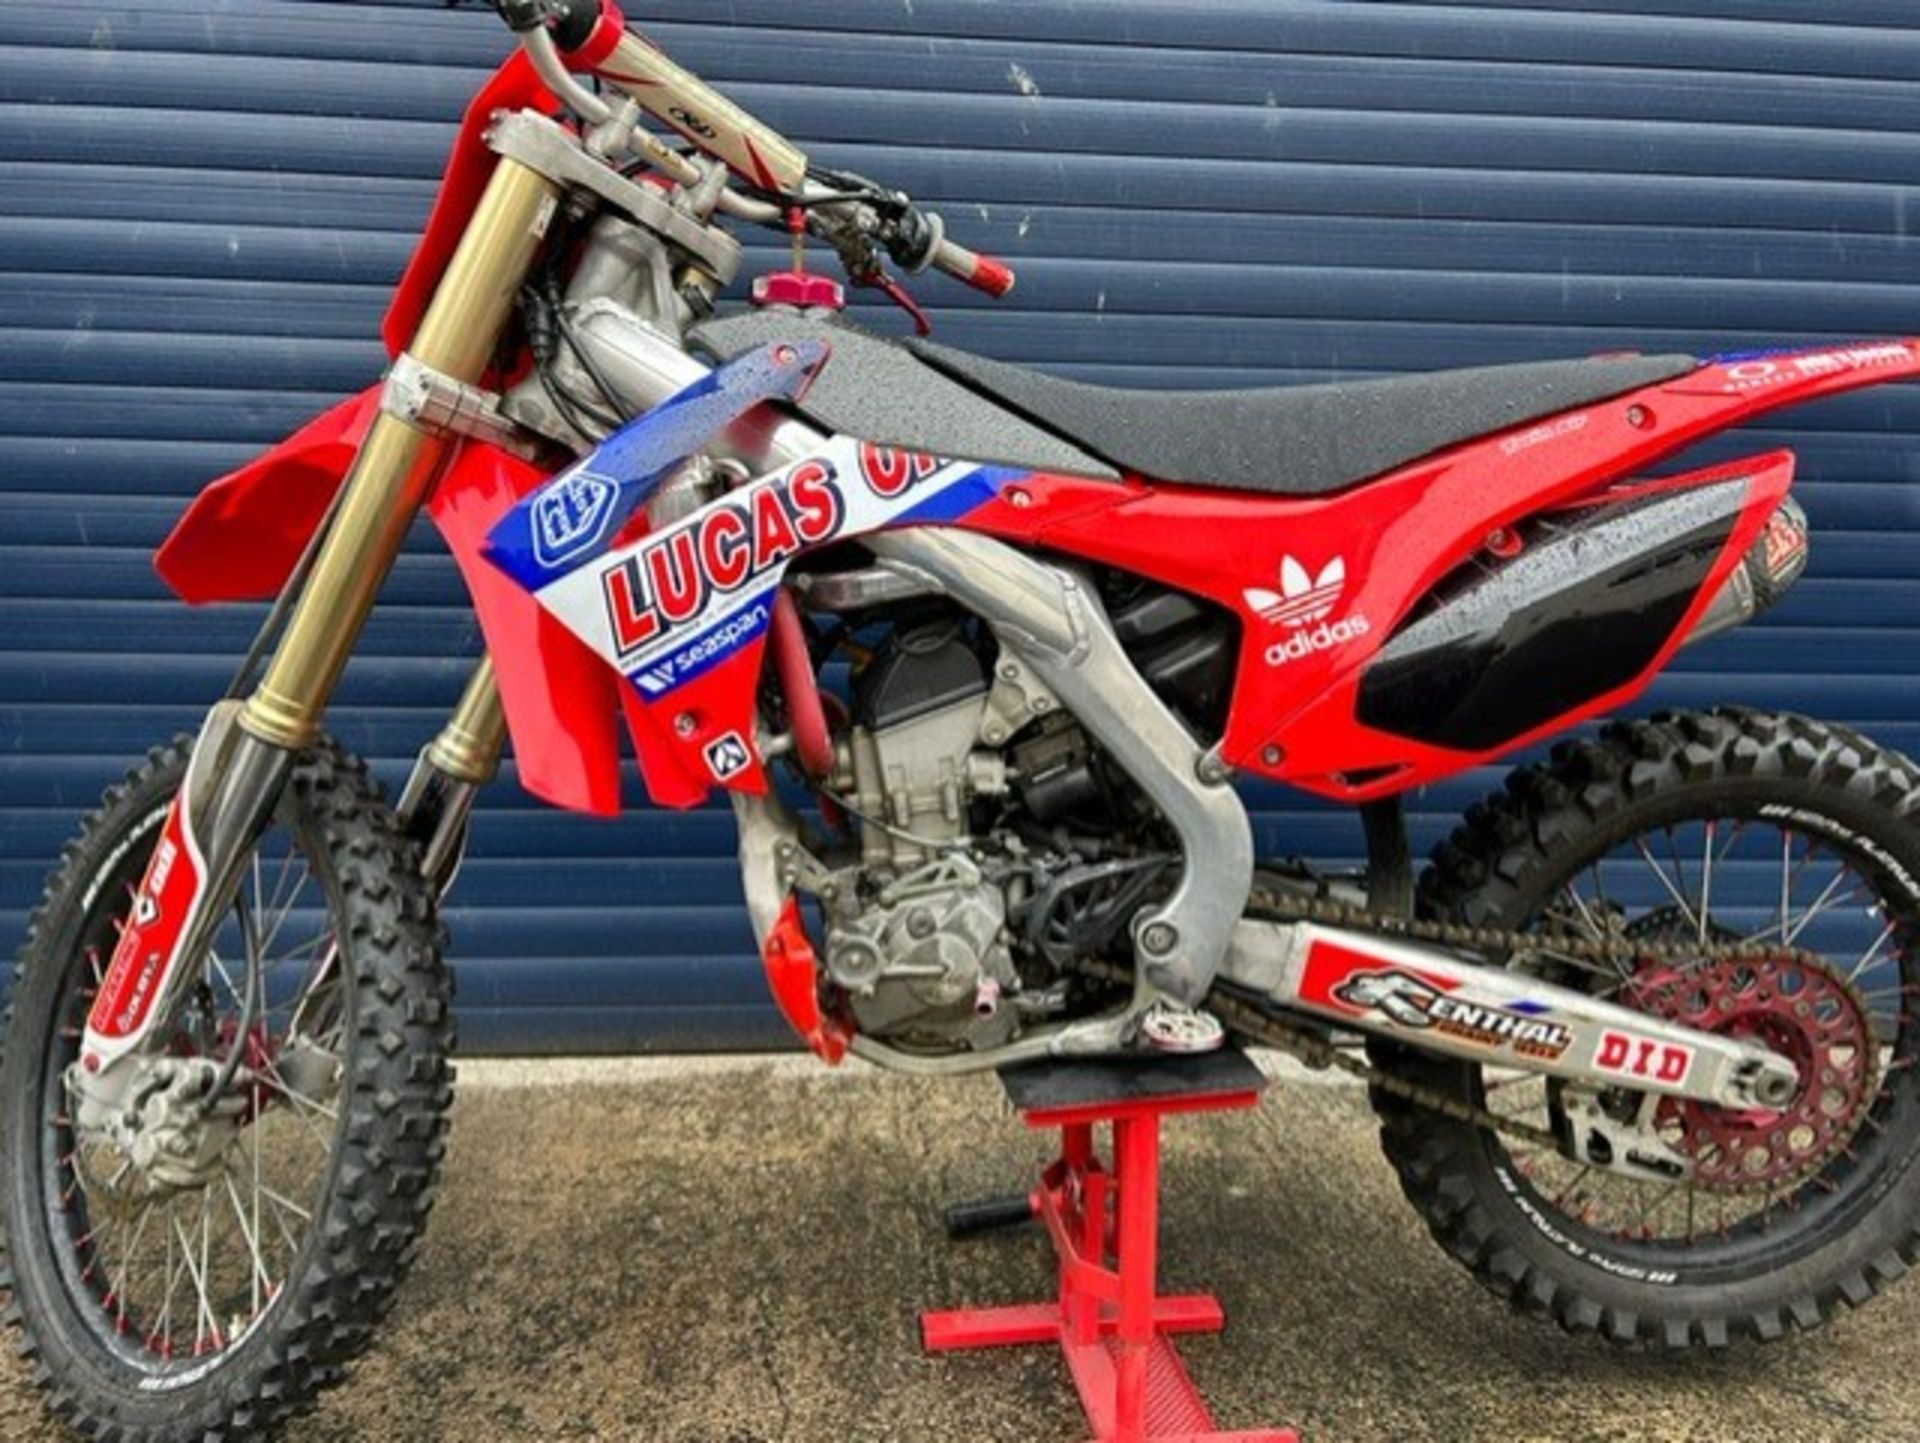 Motocross bike Honda crf450  rapid piece of kit 2015 model hasn’t been raced ever just pottering